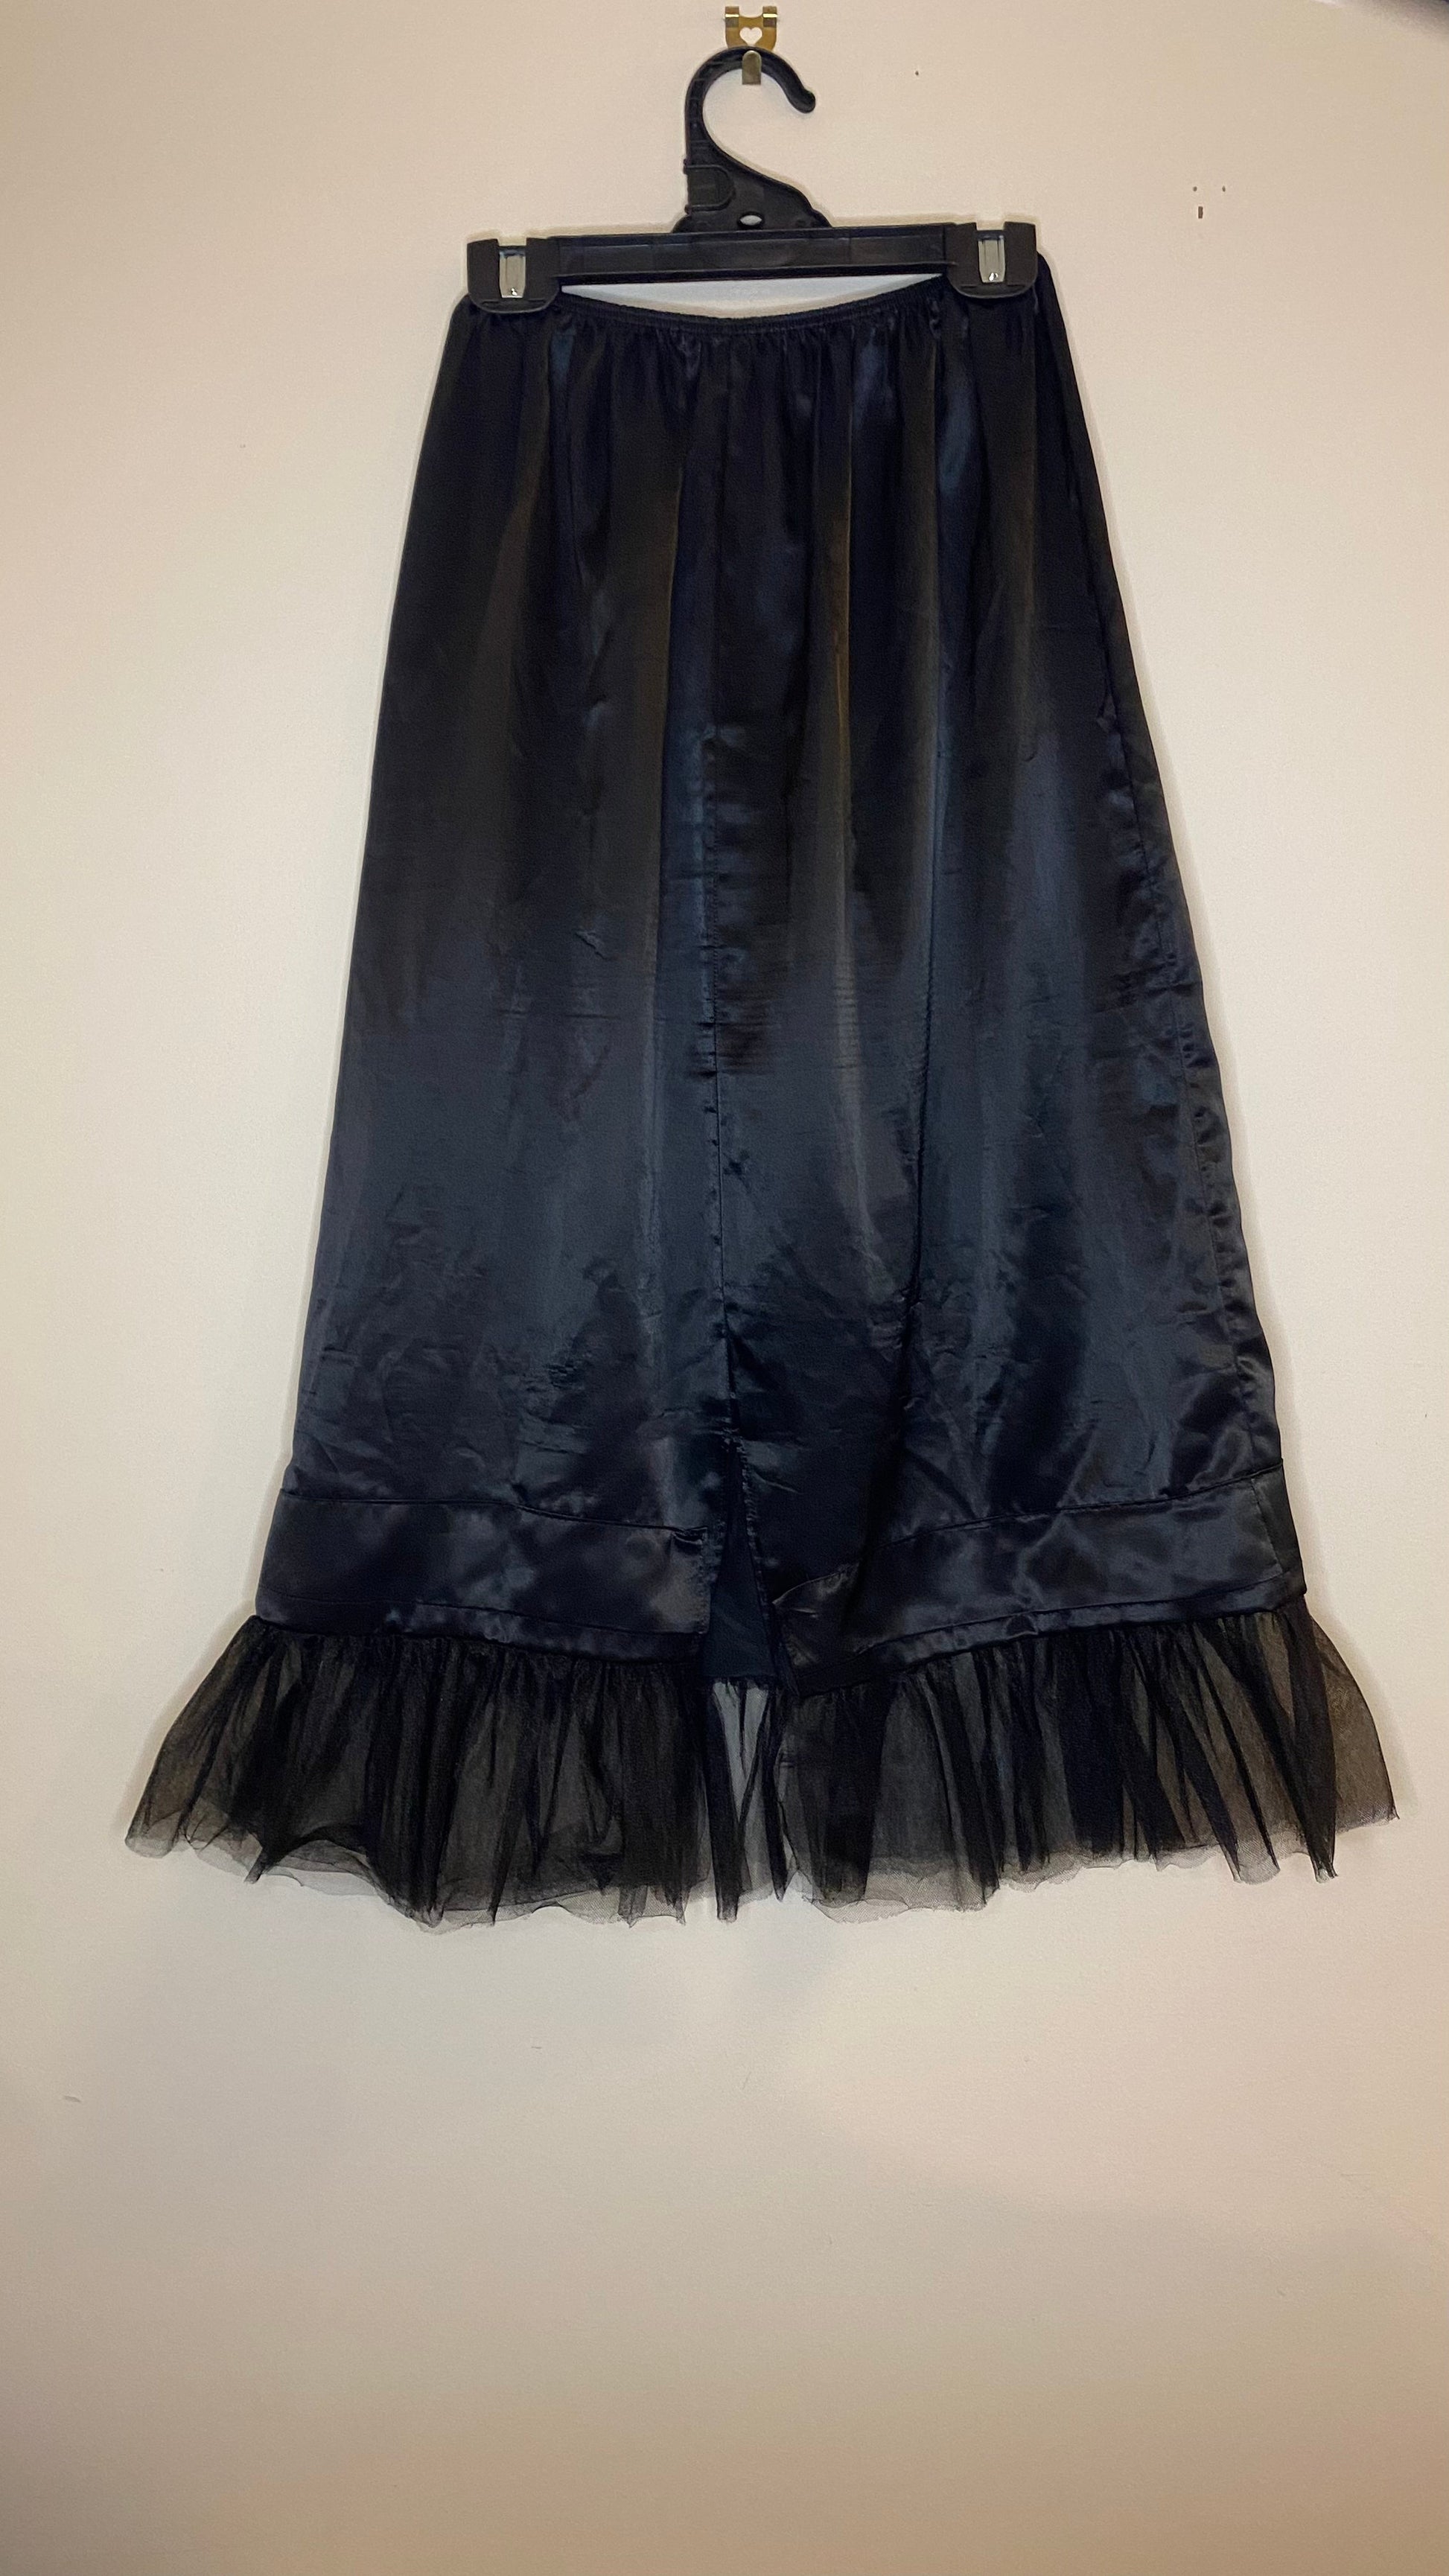 Stunning Black Skirt - Getting Thrifty